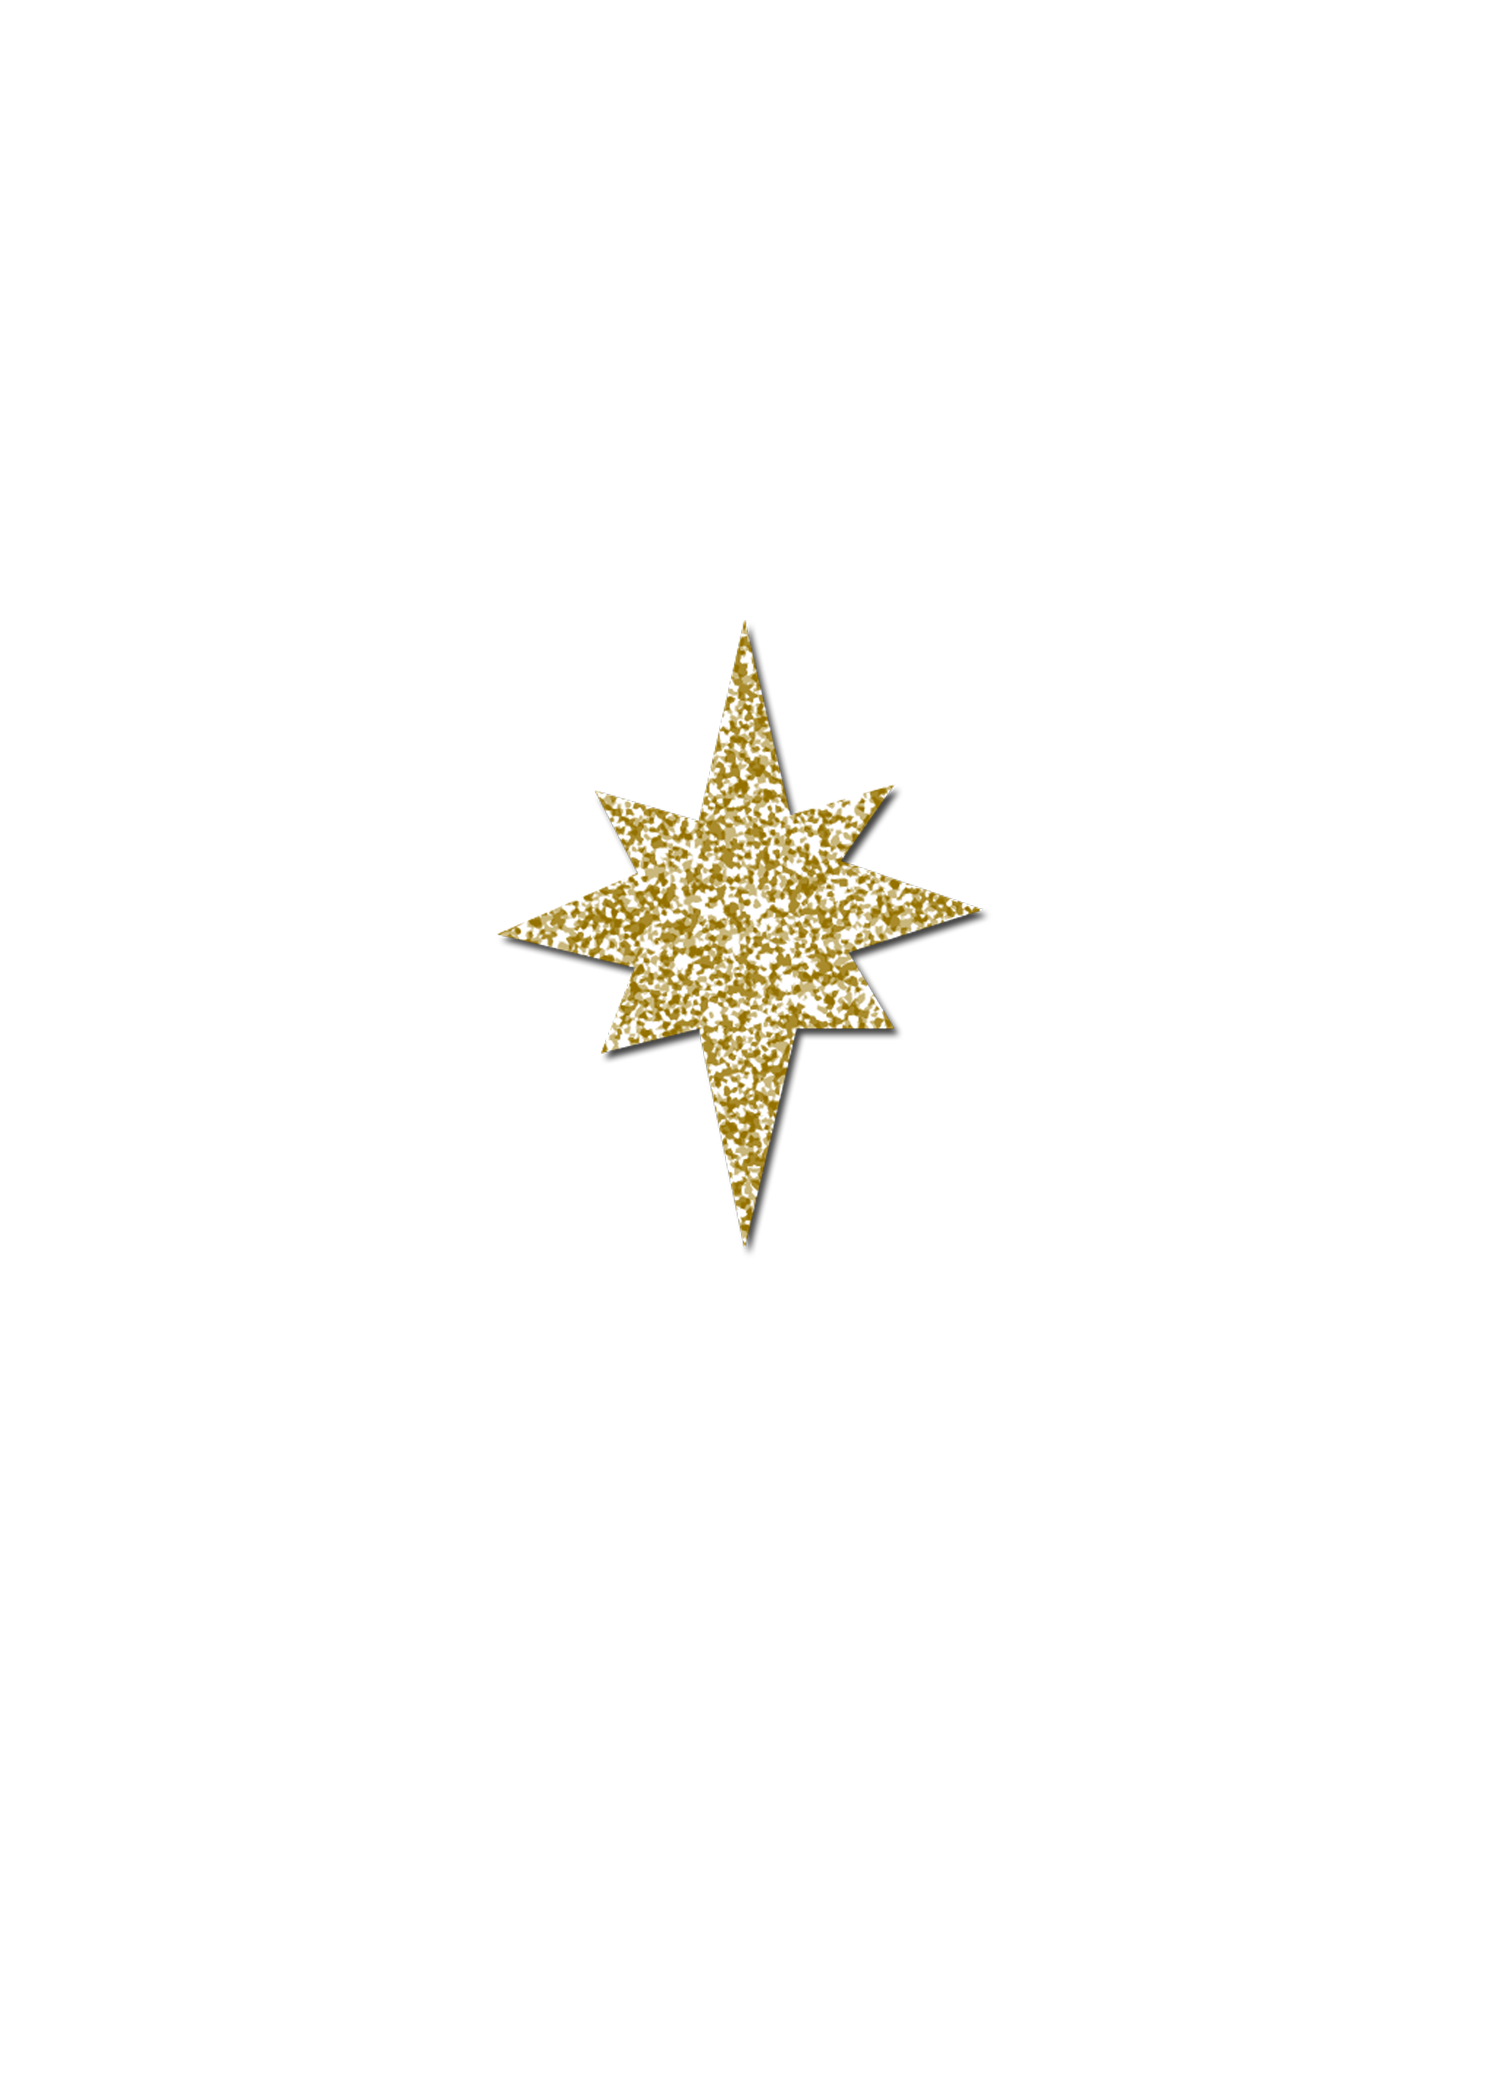 Free Glitter Star Cliparts, Download Free Clip Art, Free